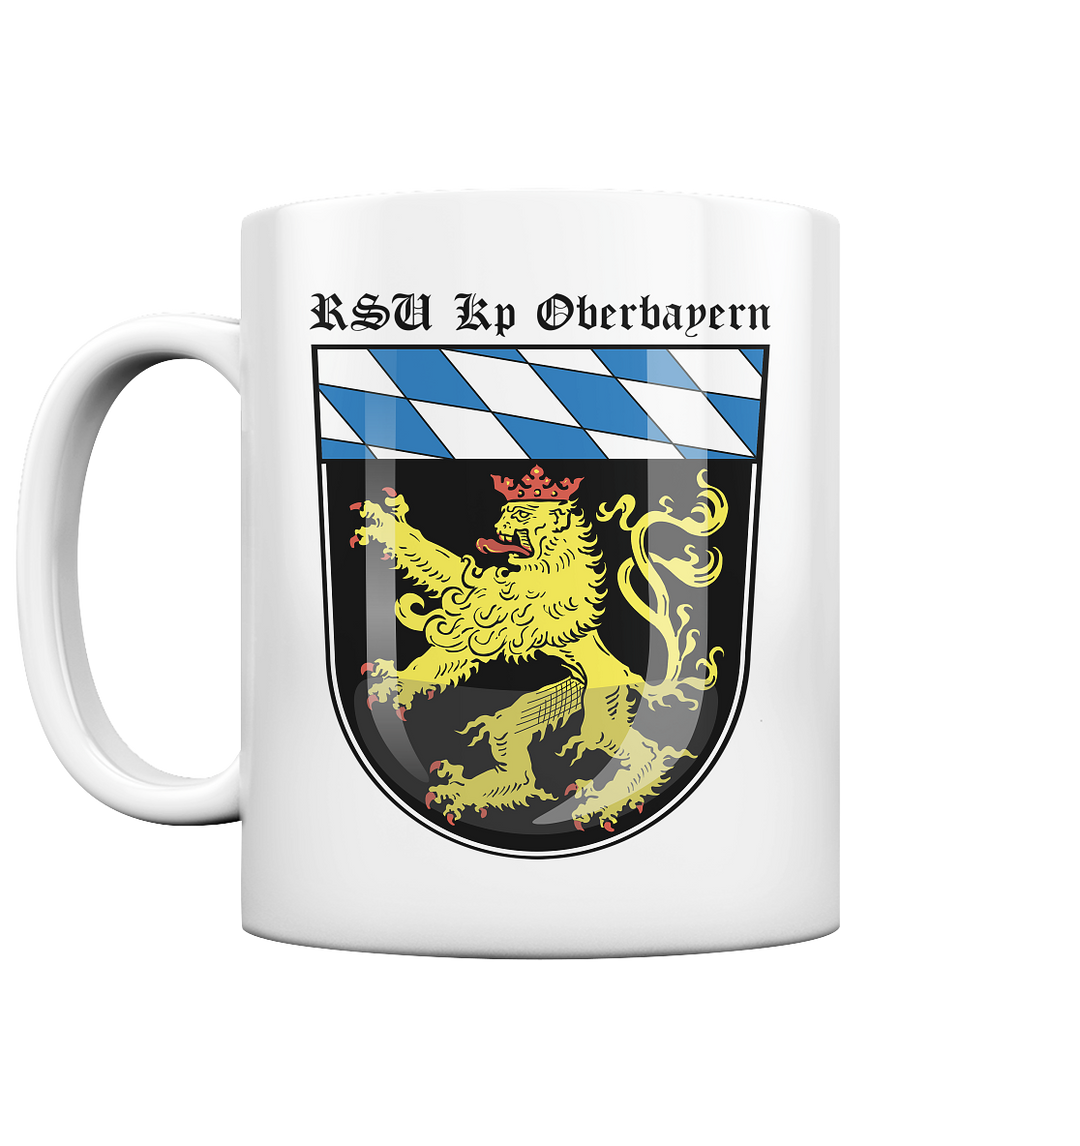 "RSU Oberbayern" - Tasse glossy